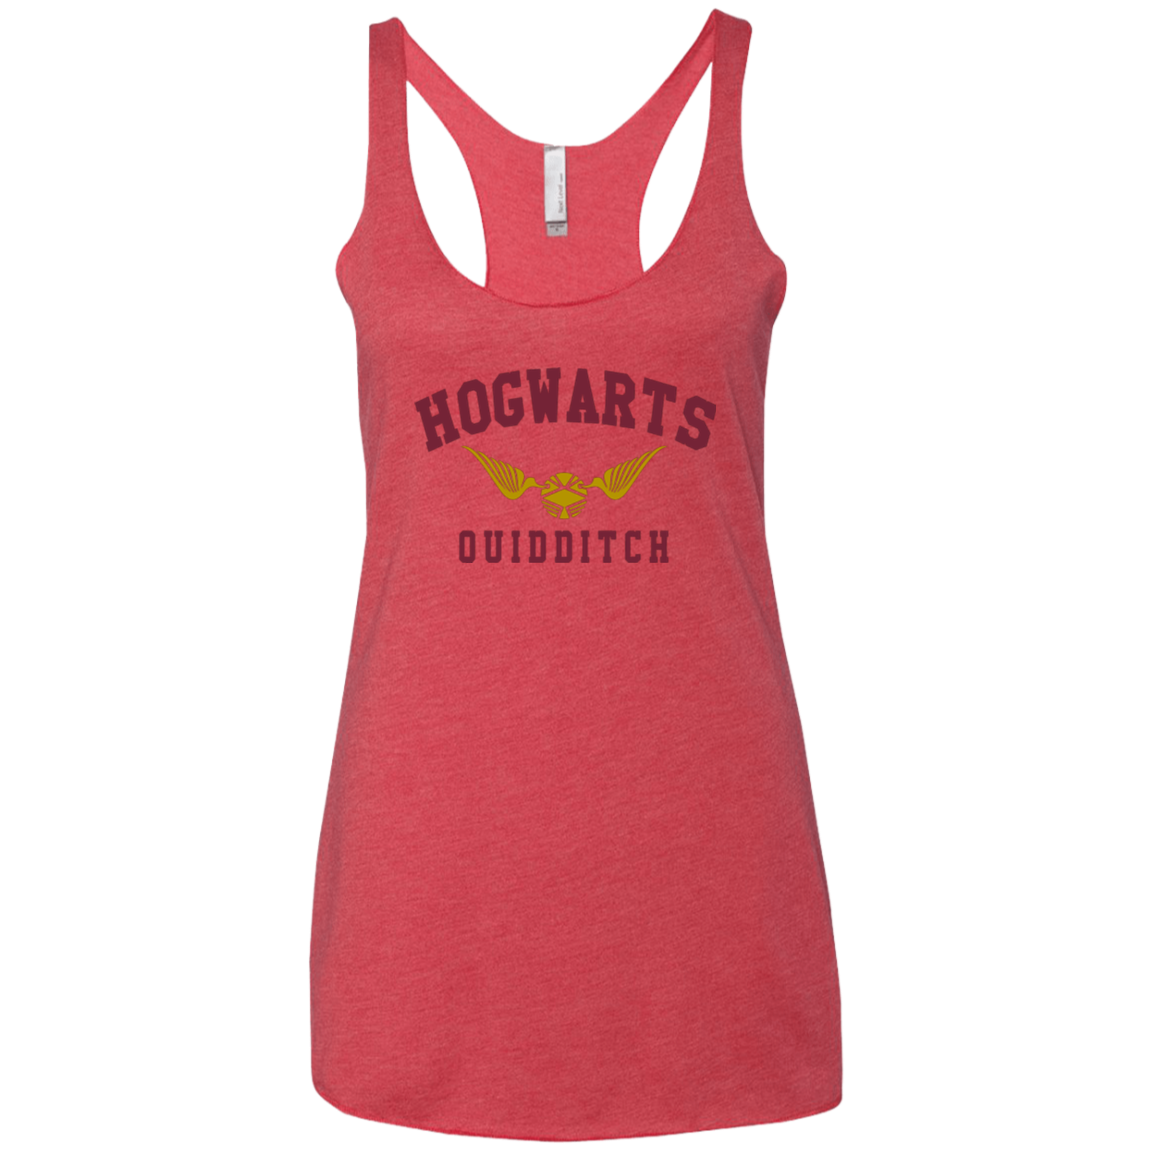 Hogwarts Quidditch Women's Triblend Racerback Tank